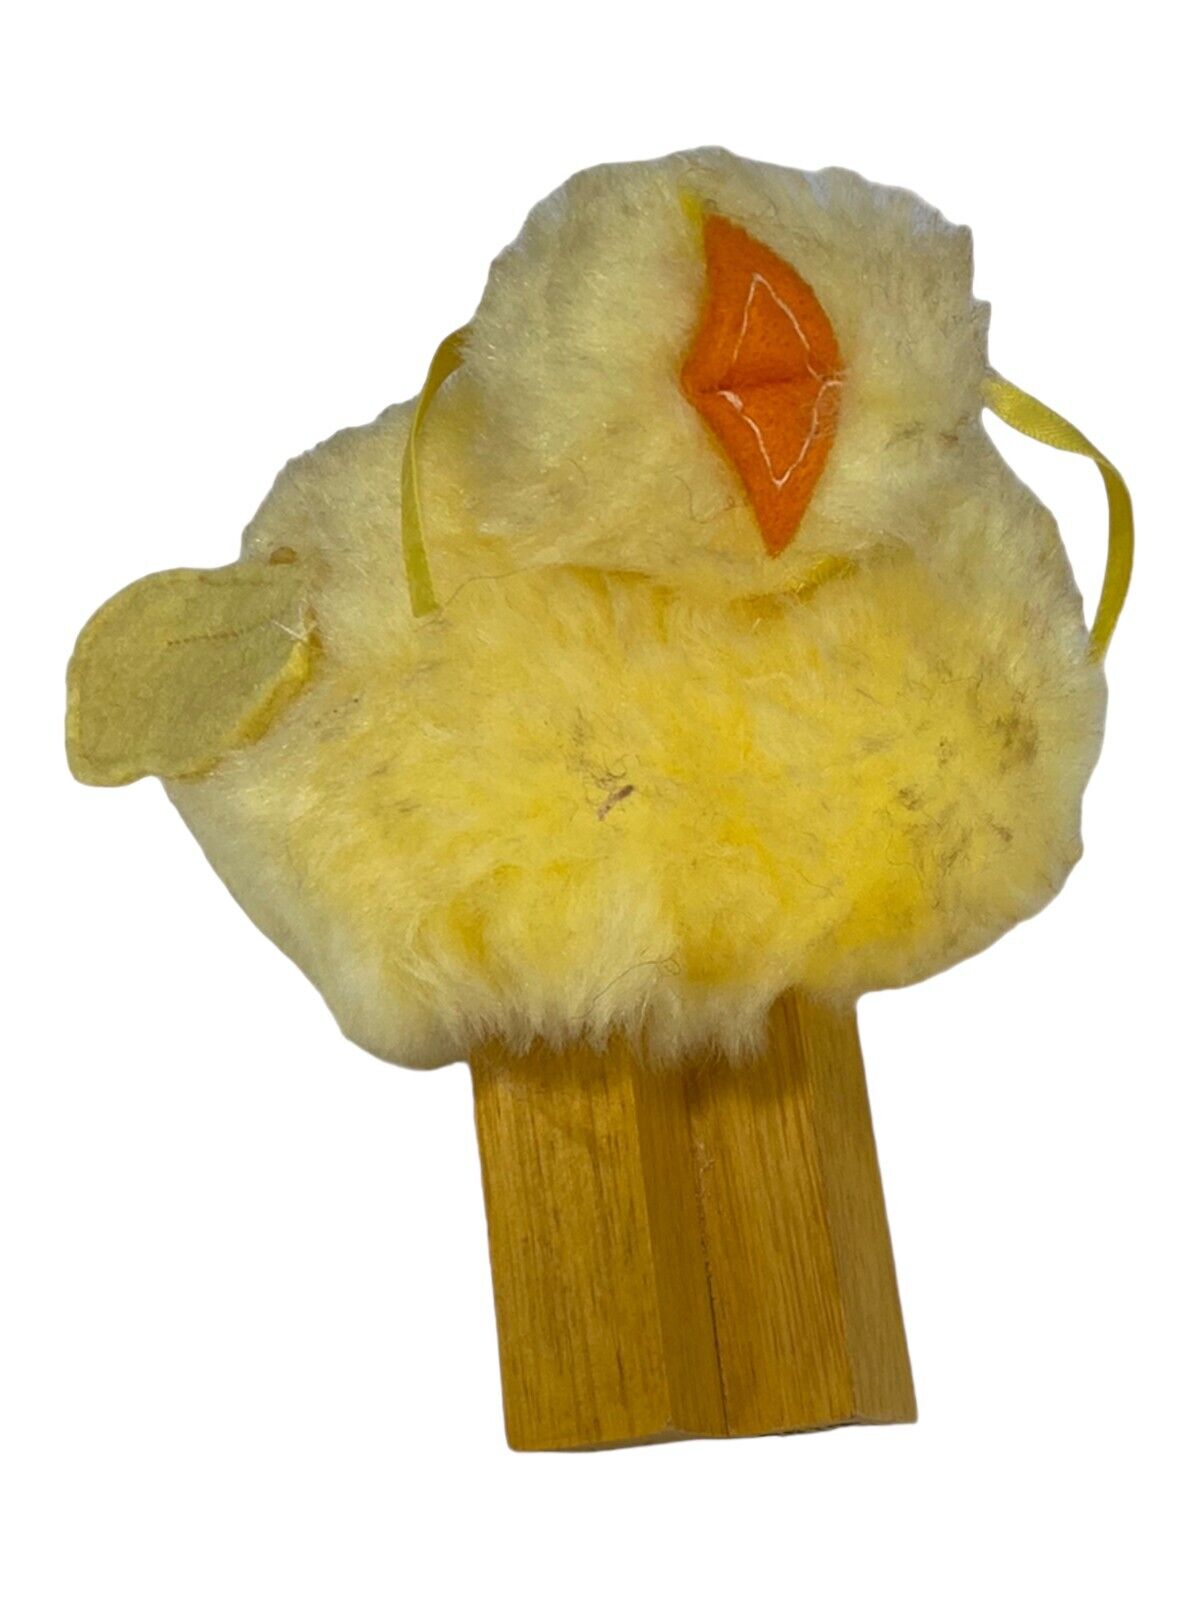 VTG 1985 Dept 56 Easter Chick Wooden Legs Yellow with Inner Shaking Squeaker